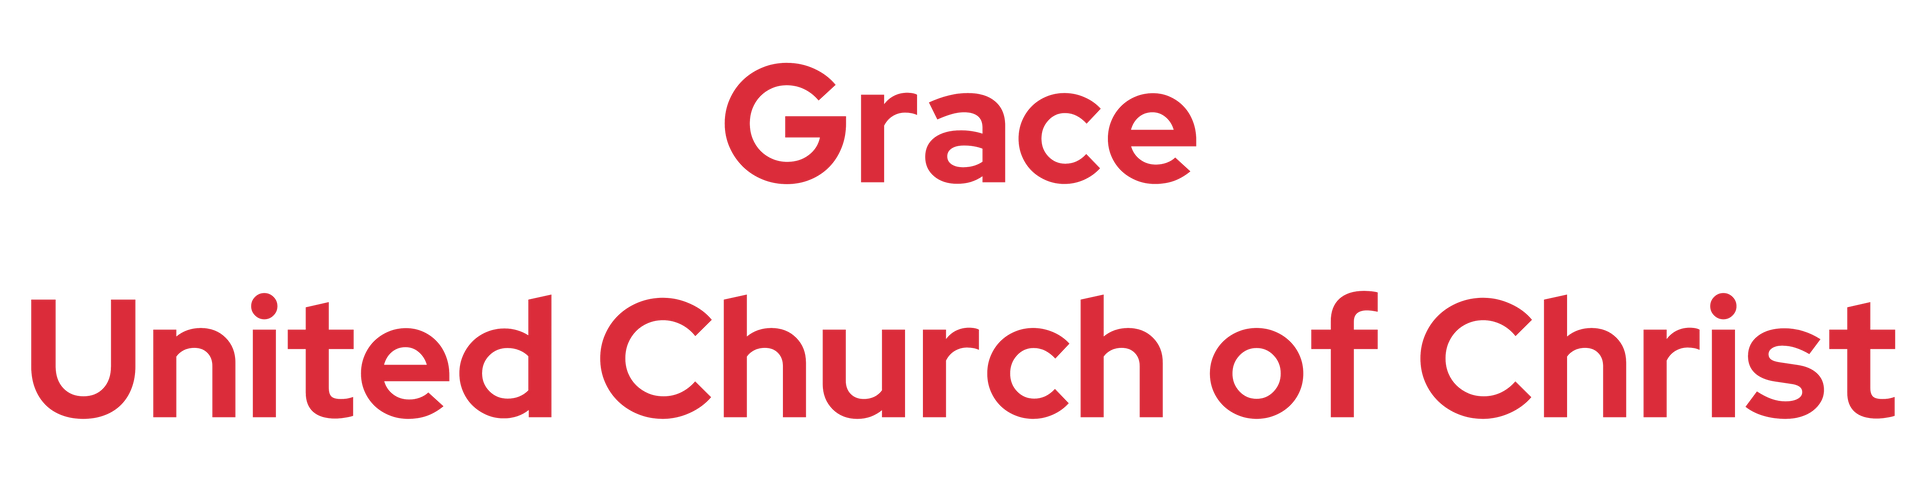 Grace United Church Of Christ logo